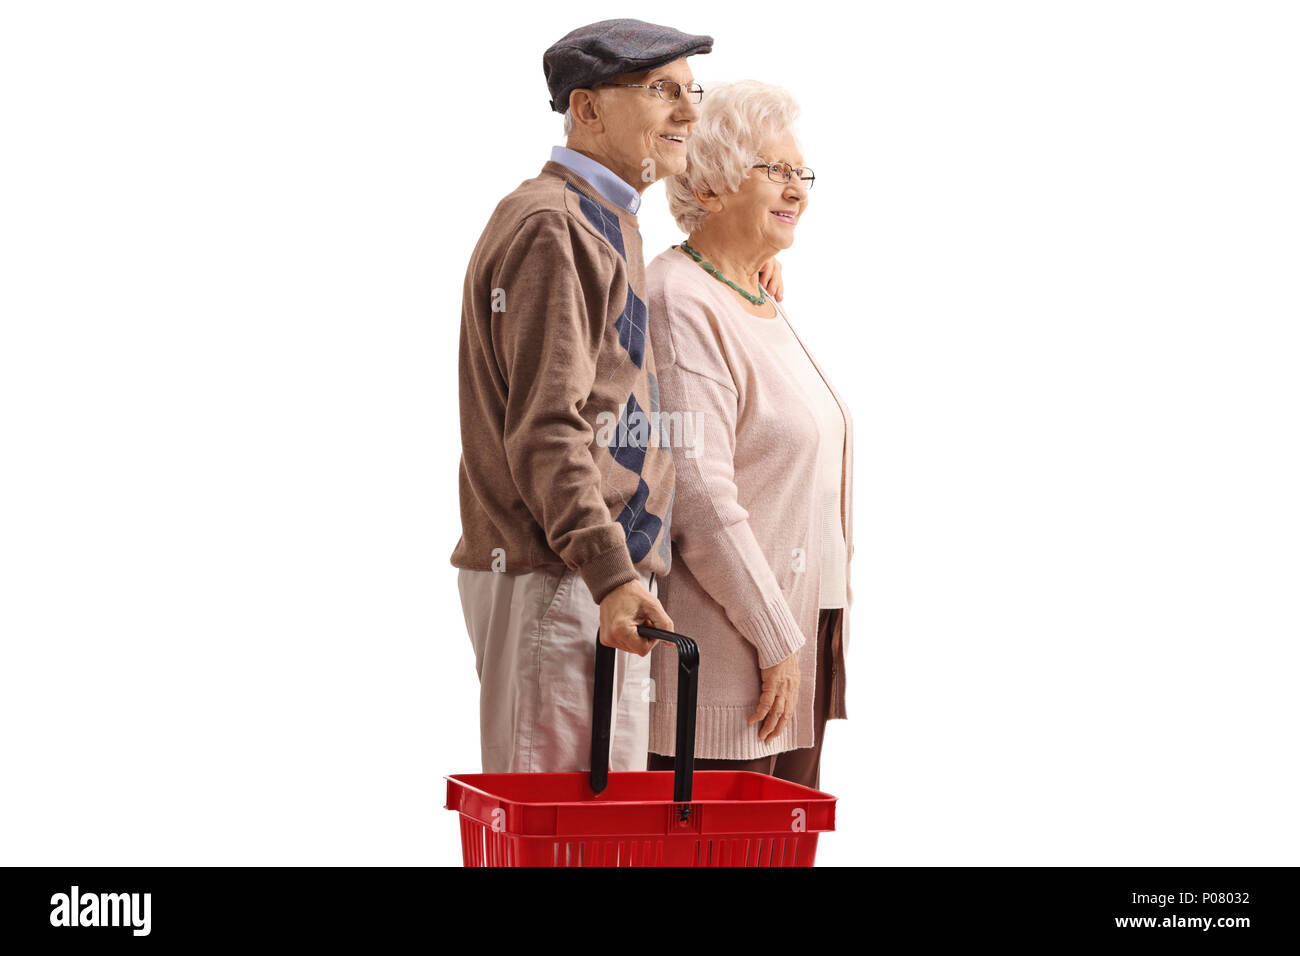 Elderly couple with an empty shopping basket isolated on white background Stock Photo